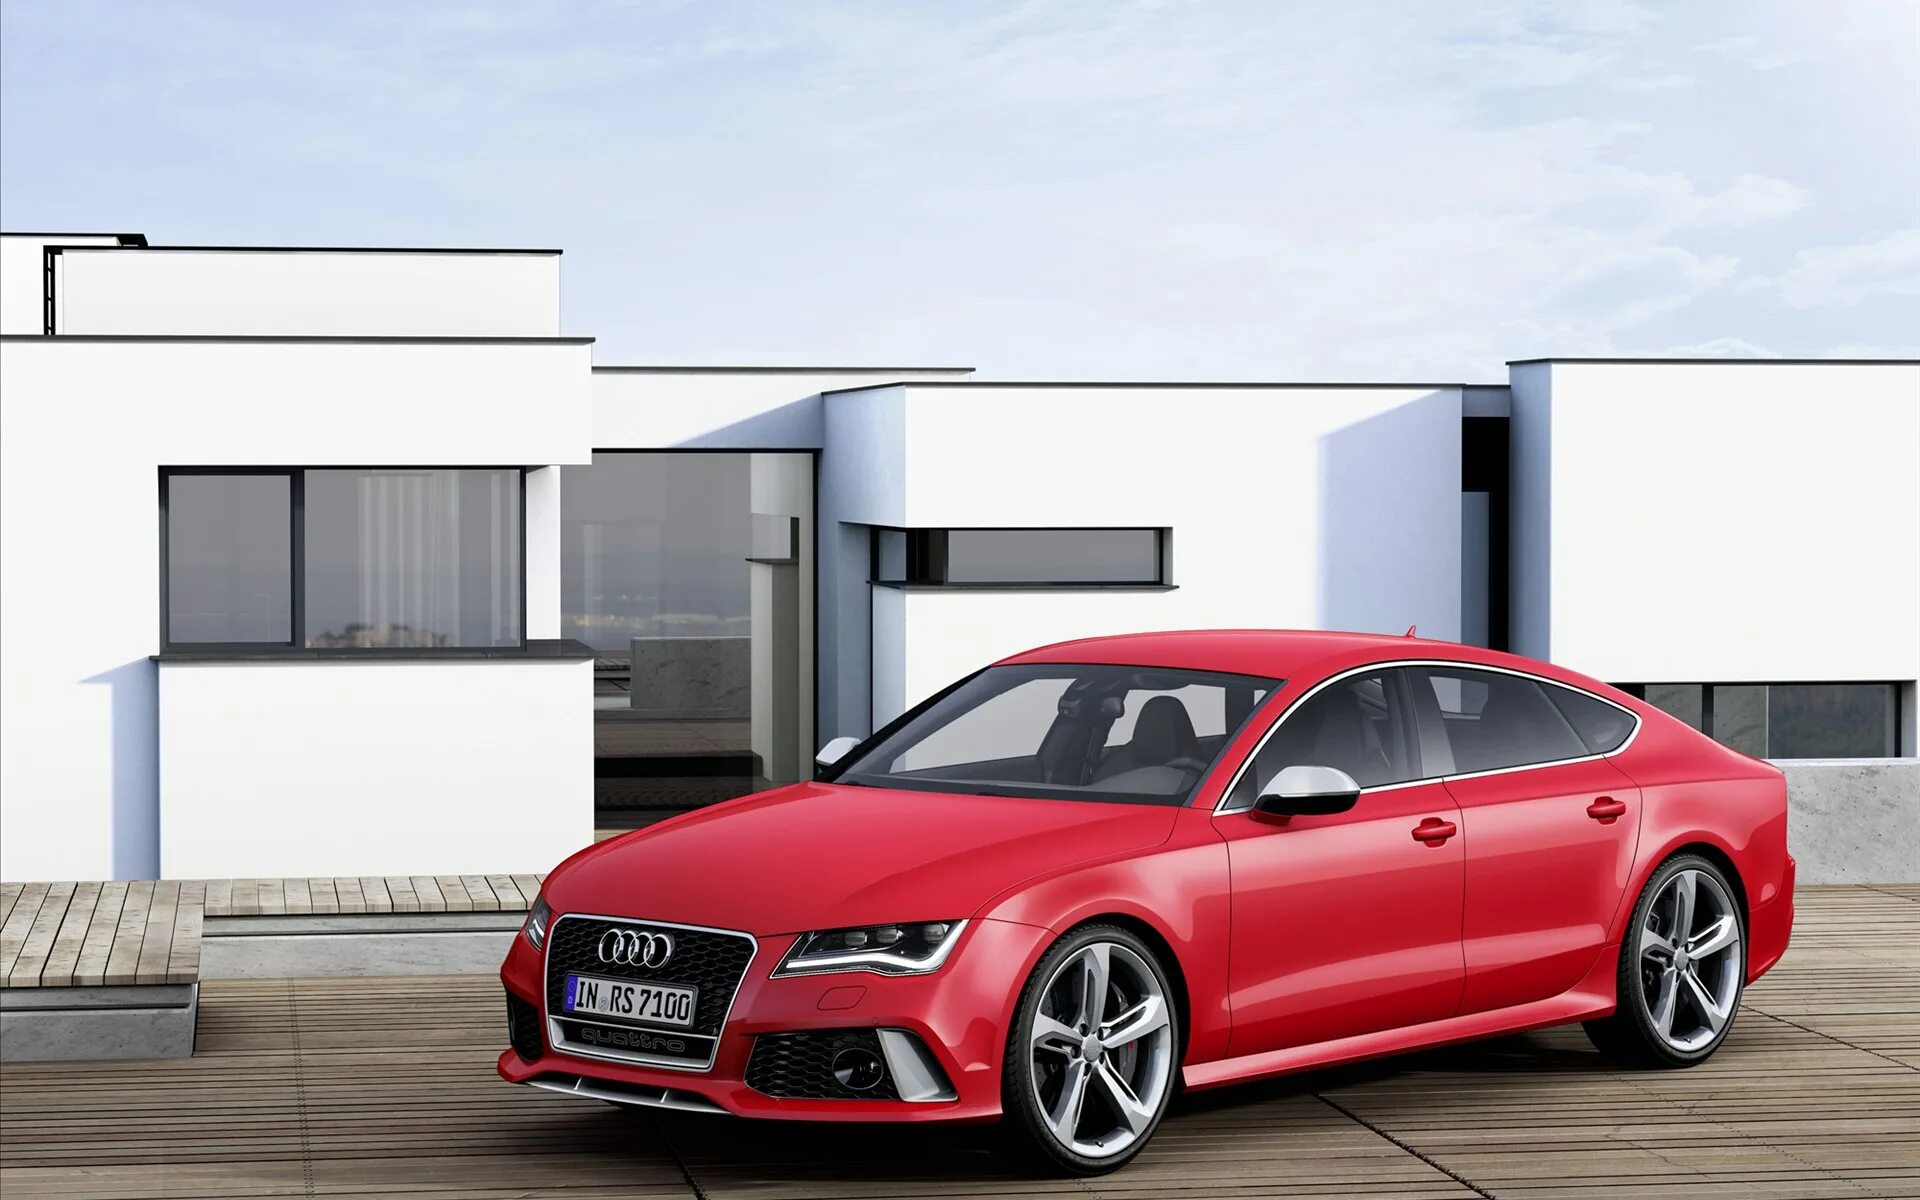 Ауди 2014 купить. Audi rs7 Sportback. Audi rs7 2014. Audi rs7 Sportback 2014. "Audi" "RS 7" "2014" W.